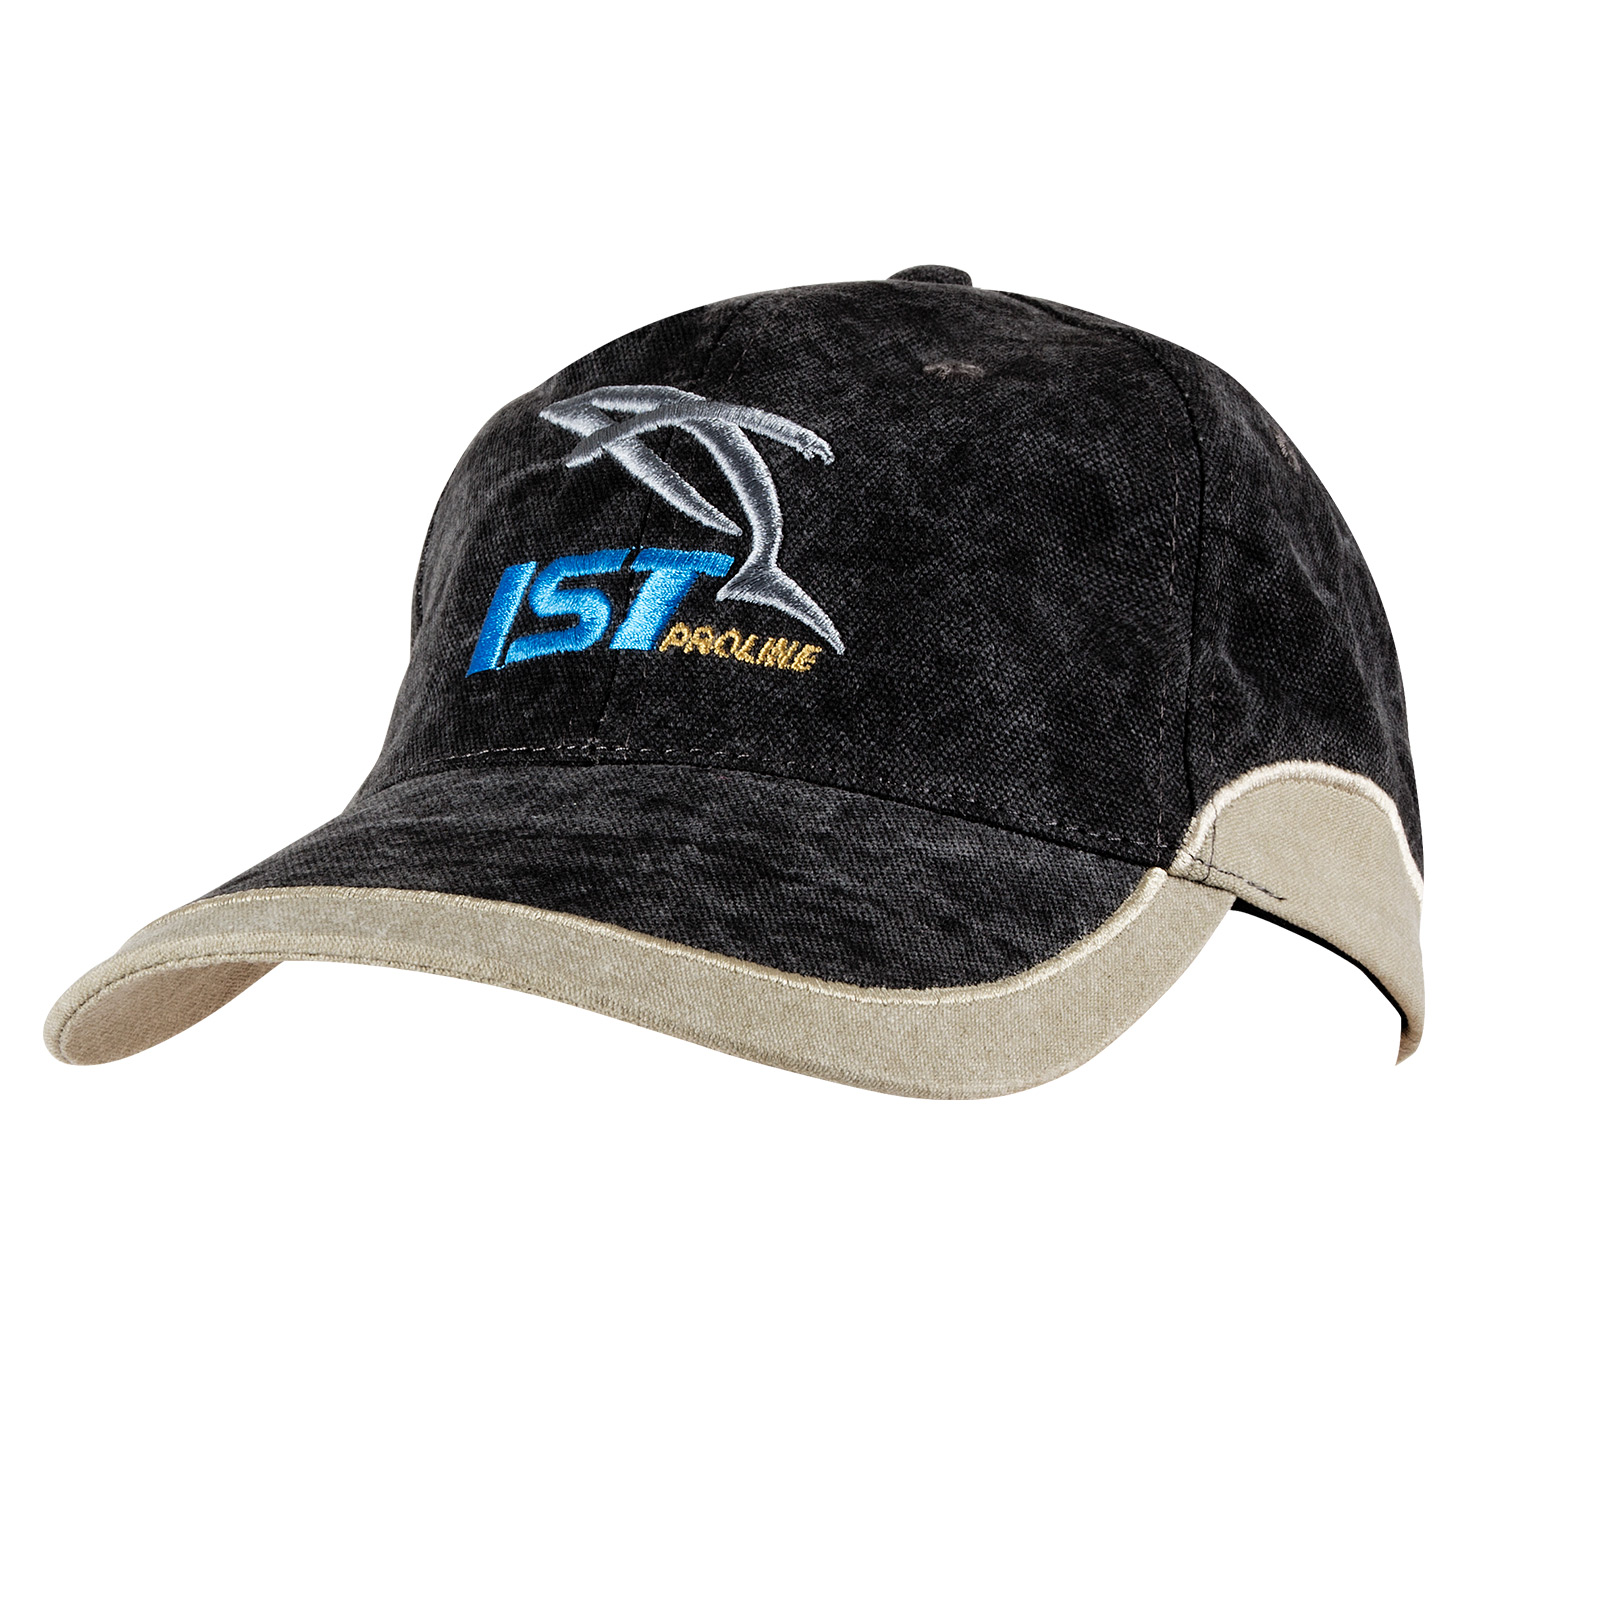 IST baseball cap